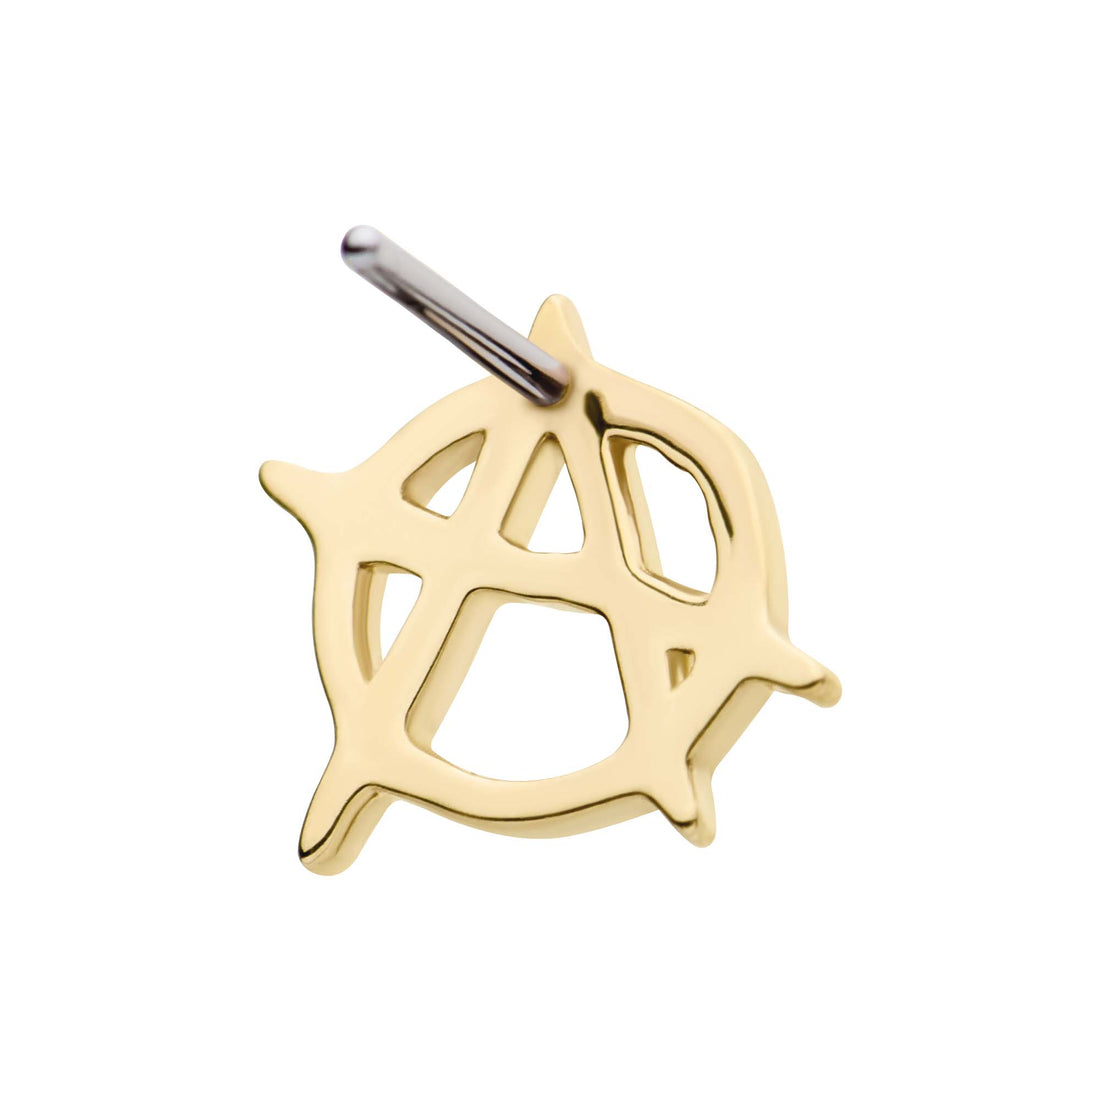 14kt Gold Threadless Anarchy Symbol Top